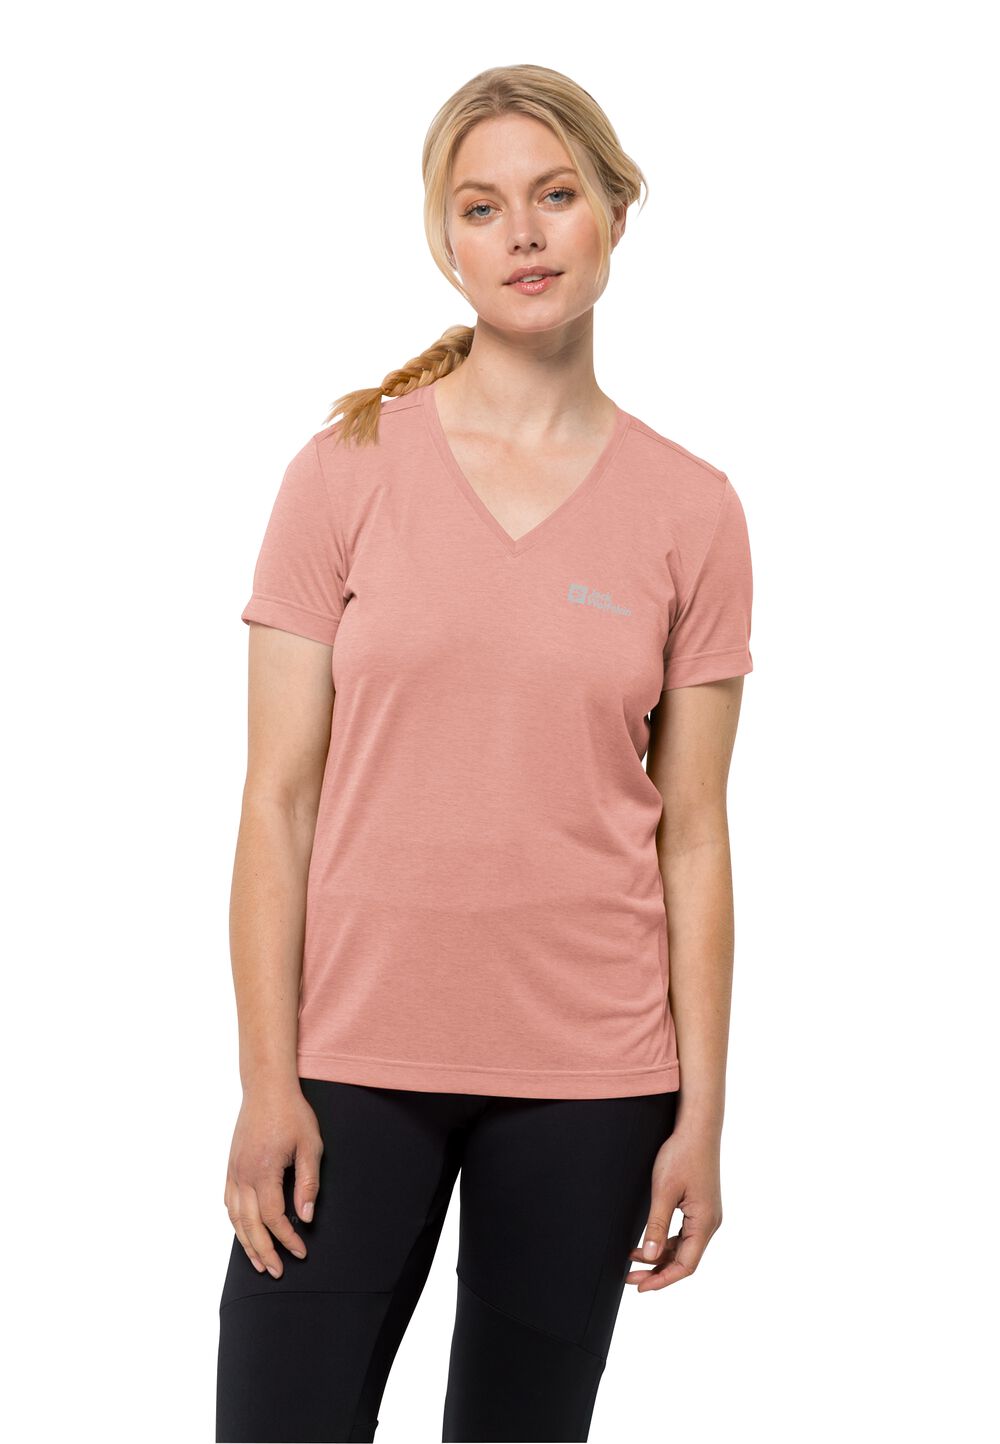 Jack Wolfskin Crosstrail T-Shirt Women Functioneel shirt Dames S bruin rose dawn